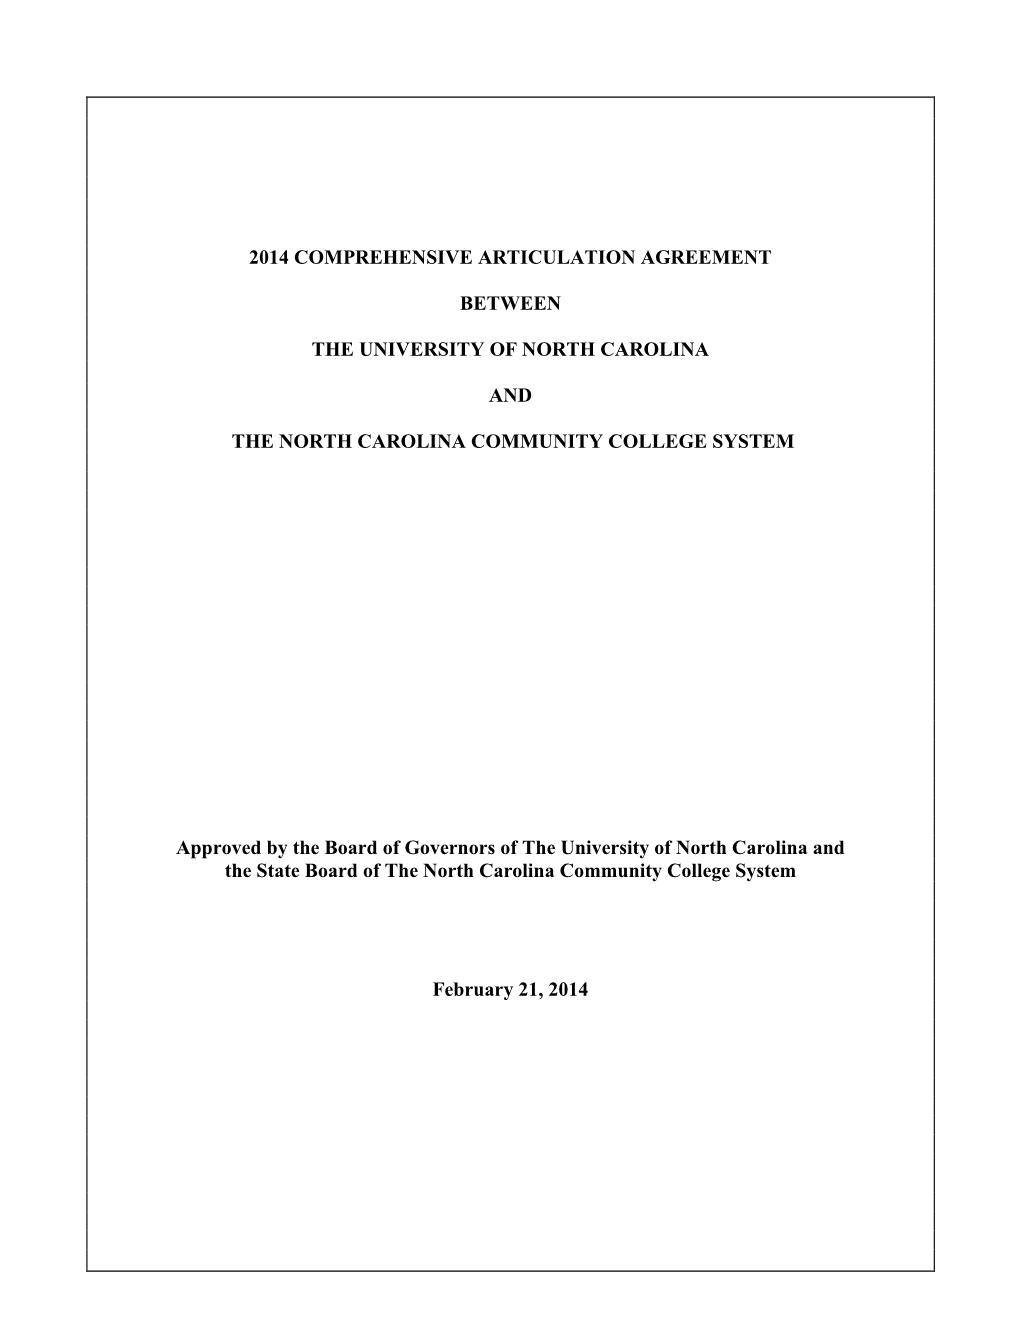 Comprehensive Articulation Agreement (Caa)